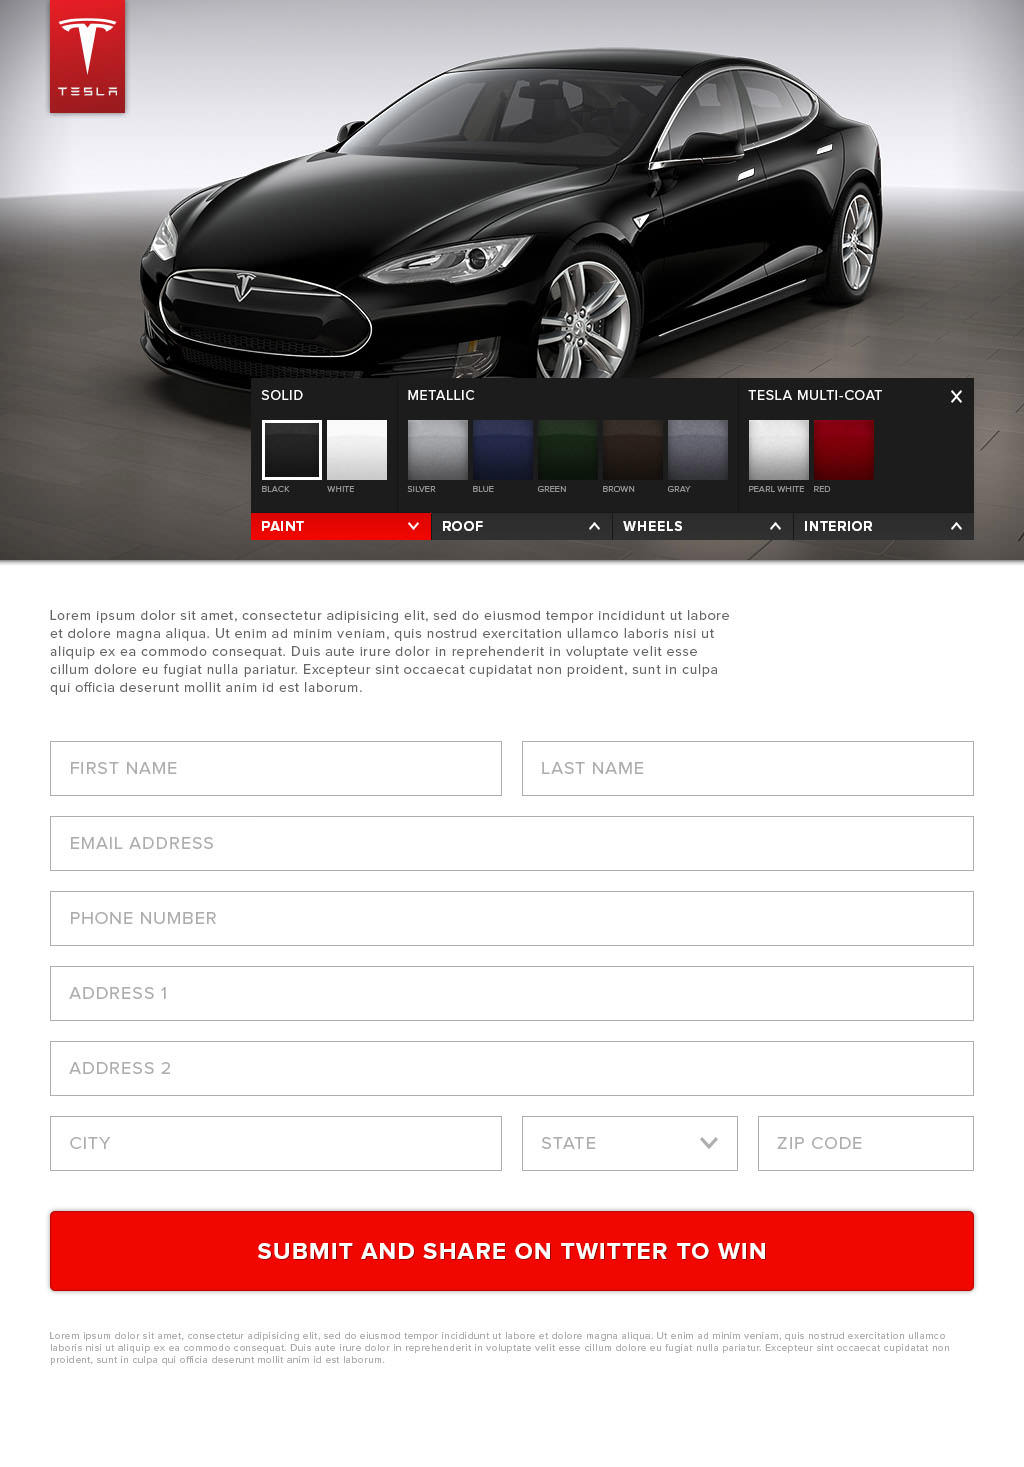 Homepage "build your custom Tesla" design for the Tesla promotional site